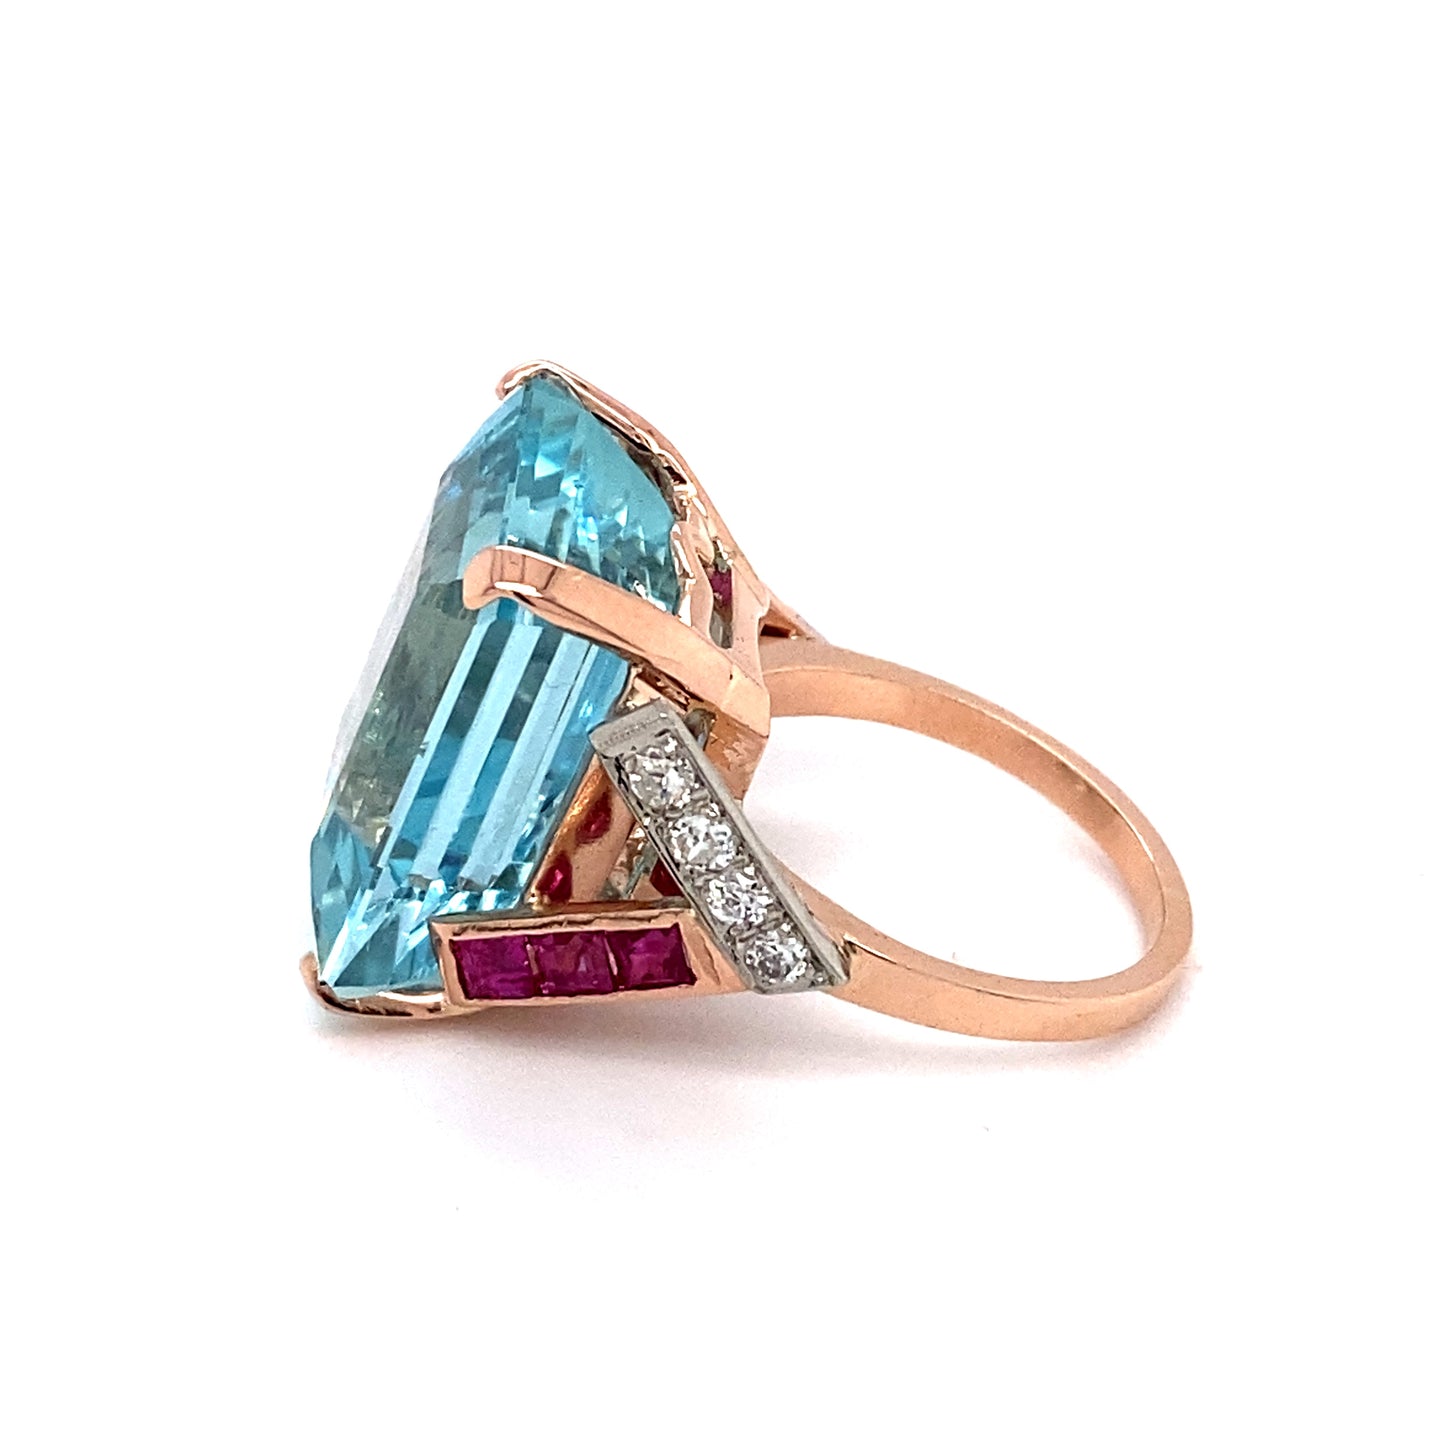 1940s 14K Rose Gold Aquamarine, Ruby and Diamond Ring